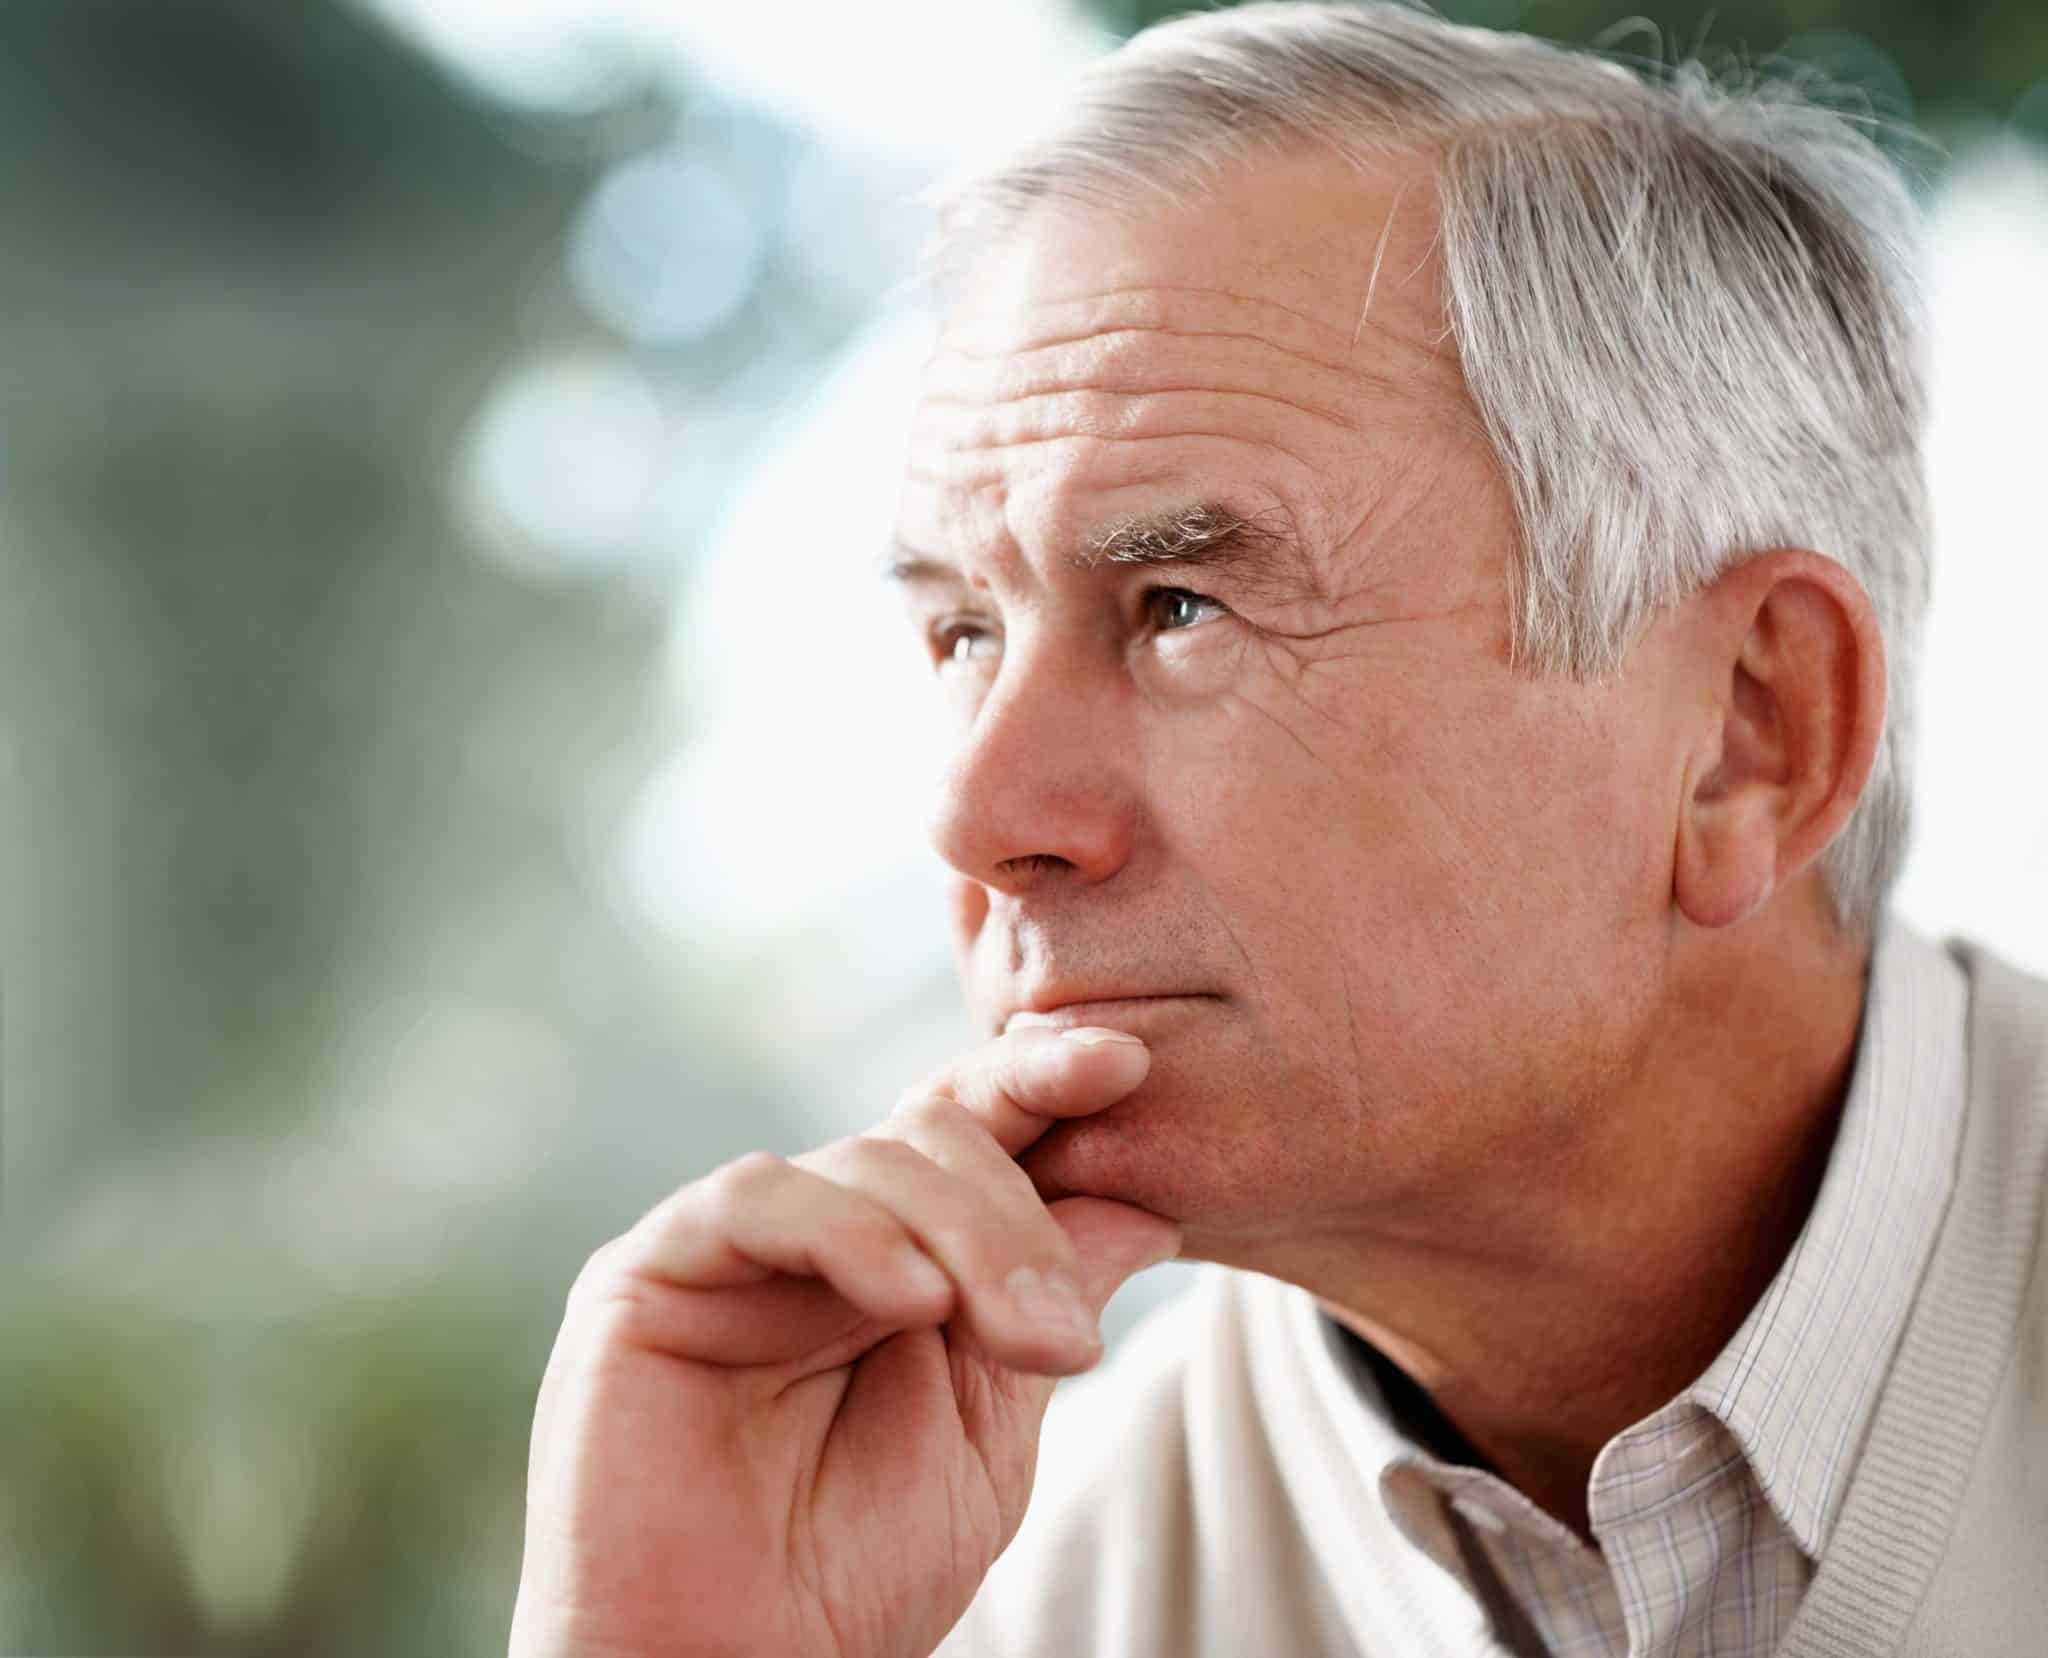 Contemplative senior man with hearing loss looking away